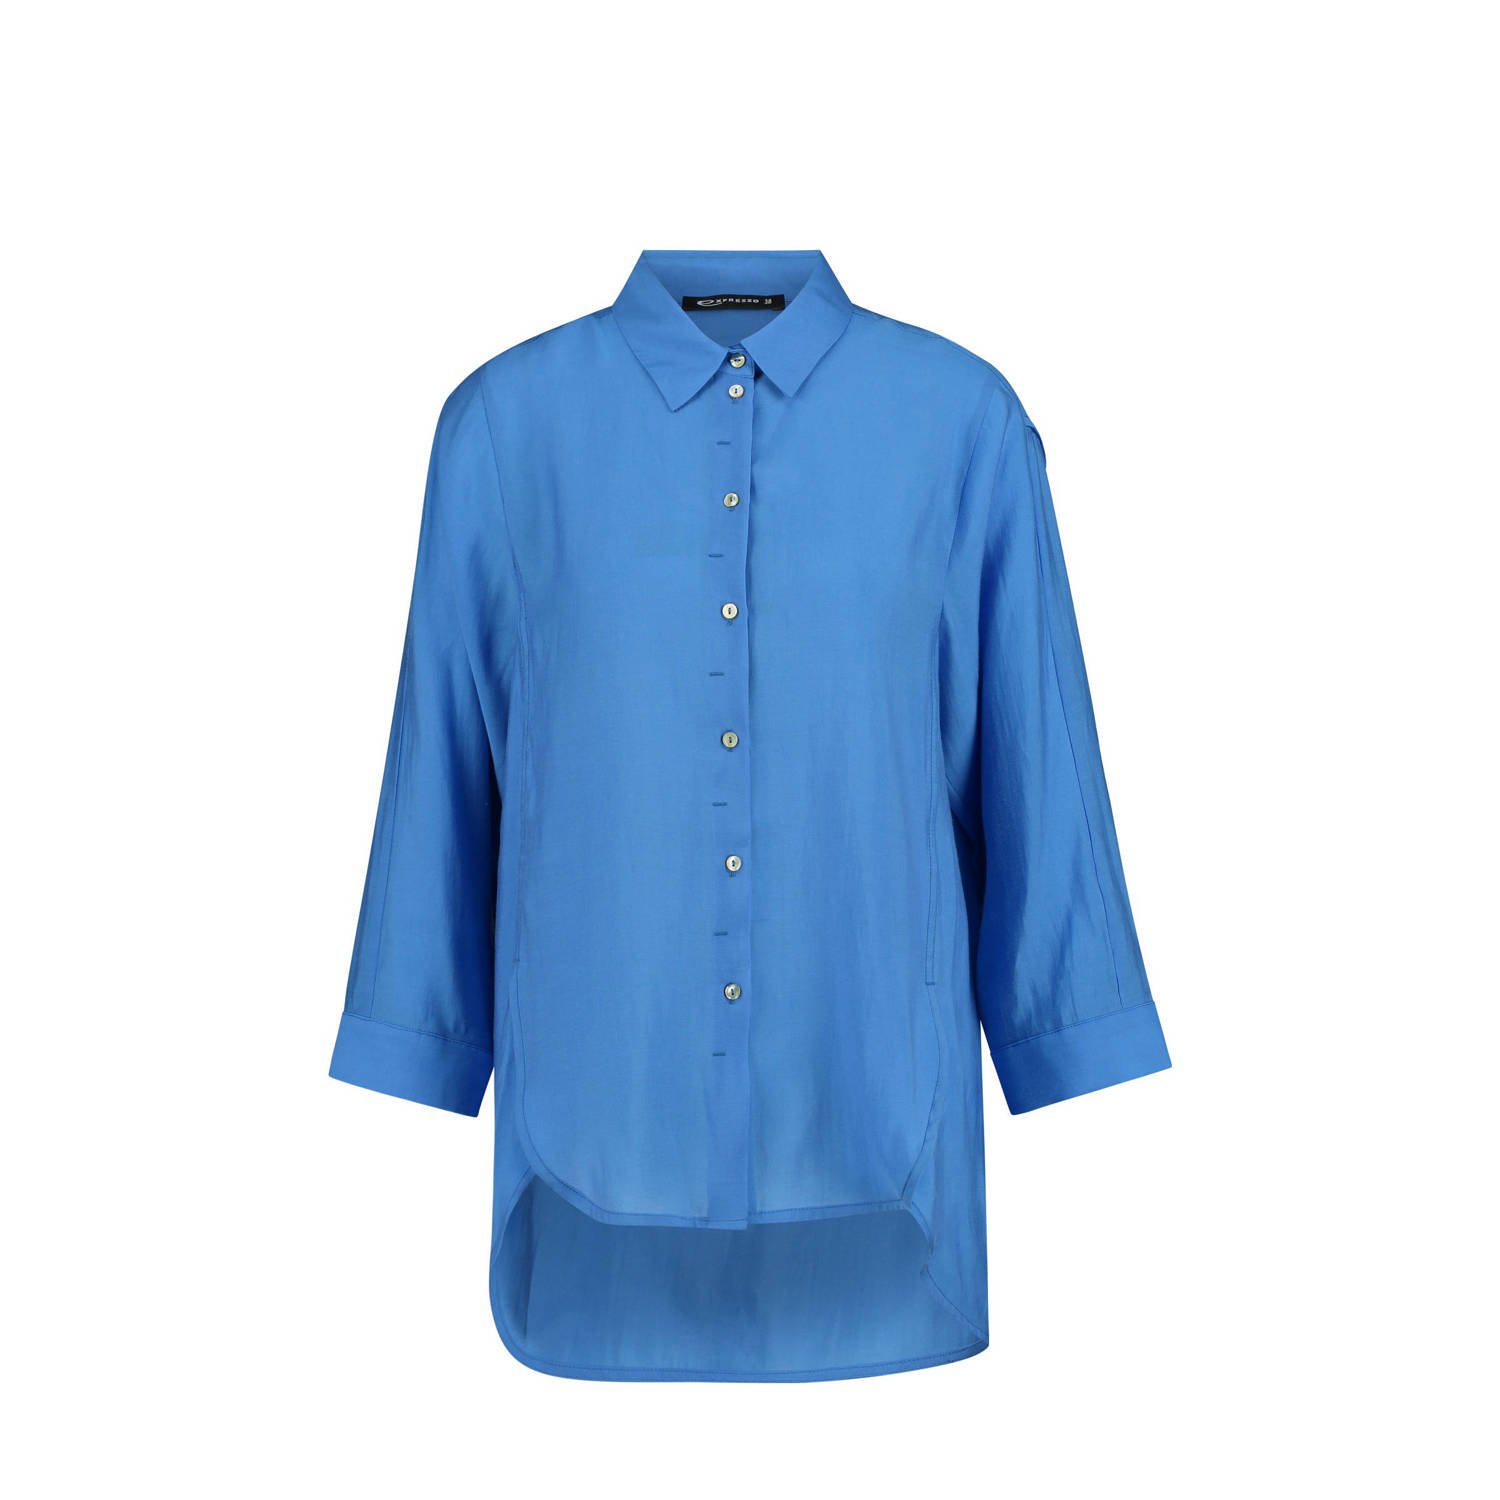 Expresso geweven blouse blauw